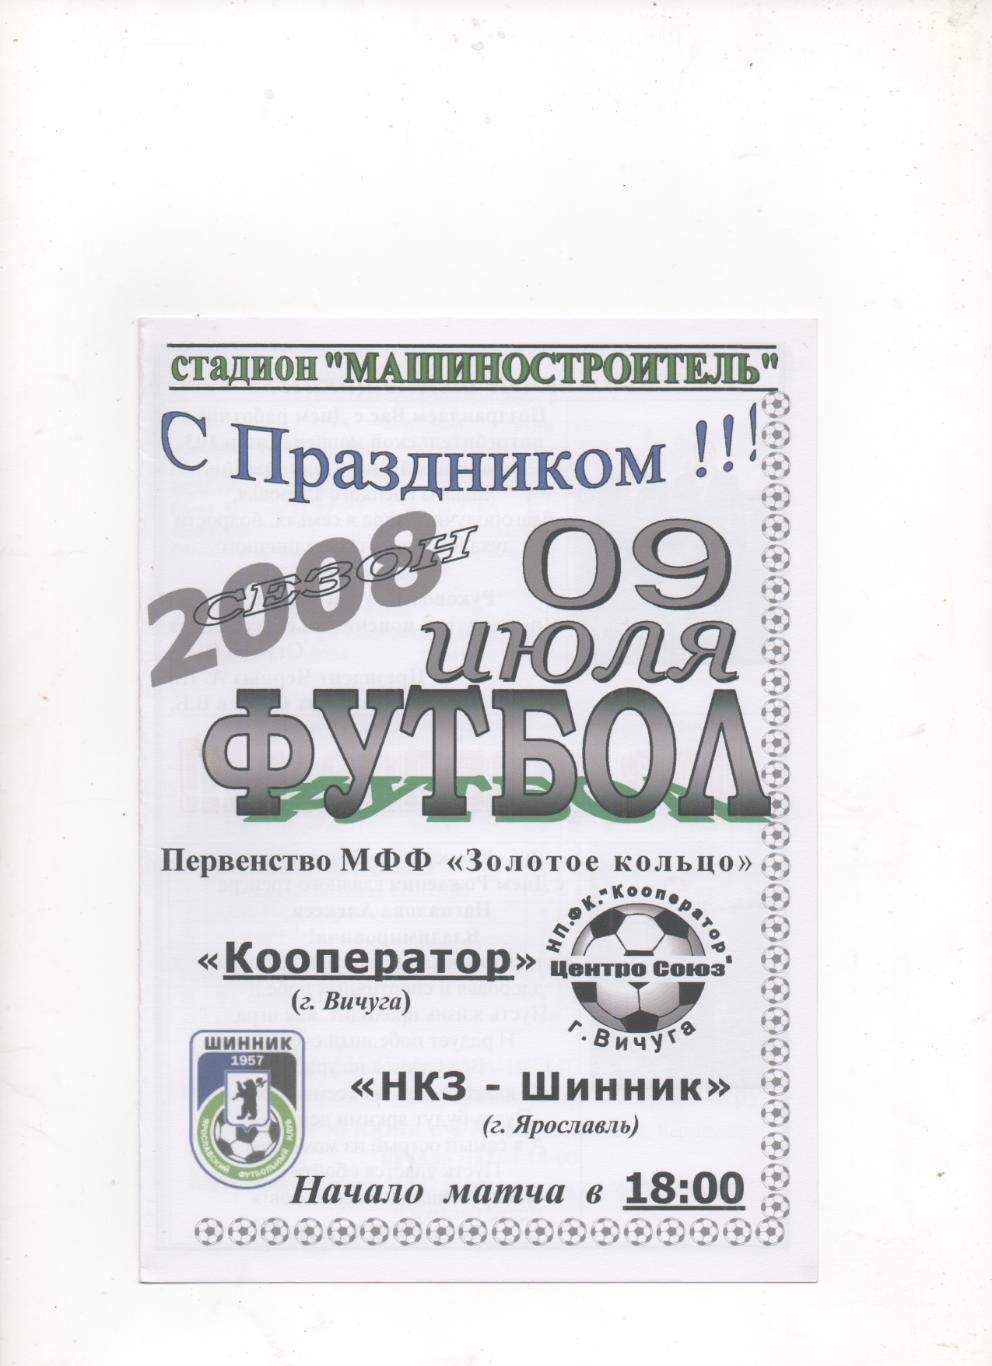 Кооператор (Вичуга) - НКЗ-Шинник (Ярославль) - 2008.